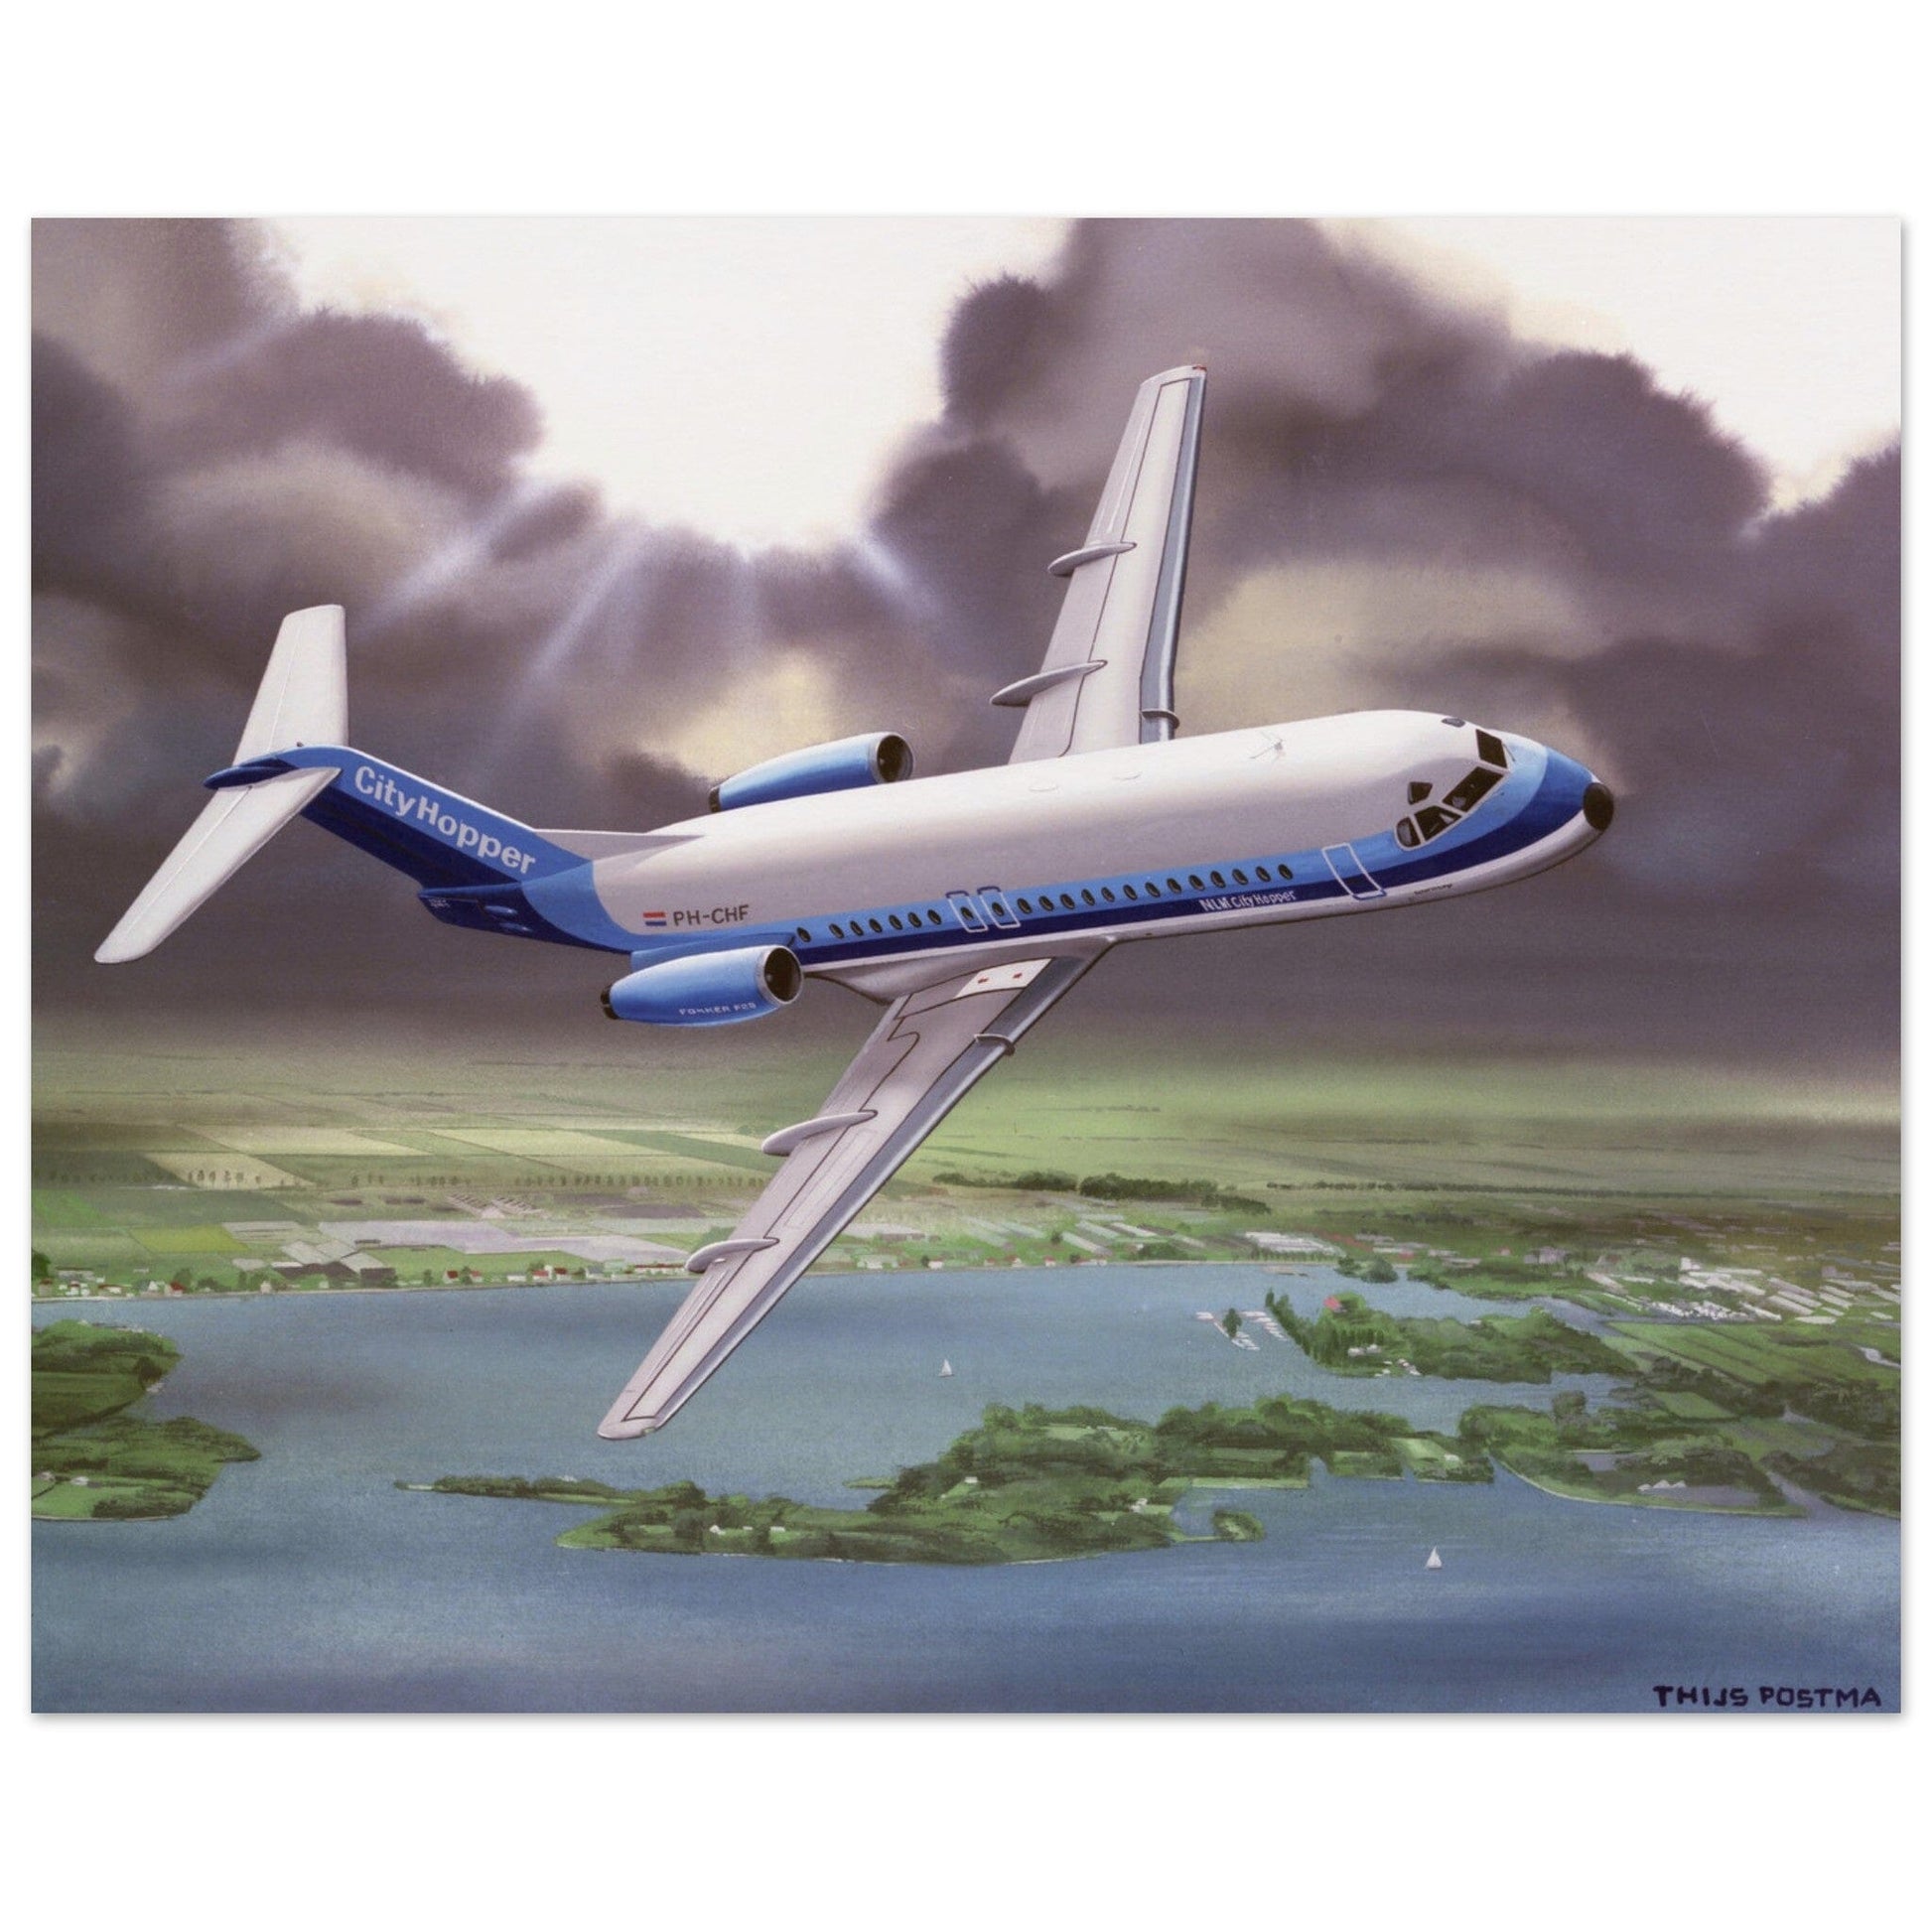 Thijs Postma - Poster - Fokker F-28 Fellowship NLM CityHopper Over Westeinder Poster Only TP Aviation Art 40x50 cm / 16x20″ 